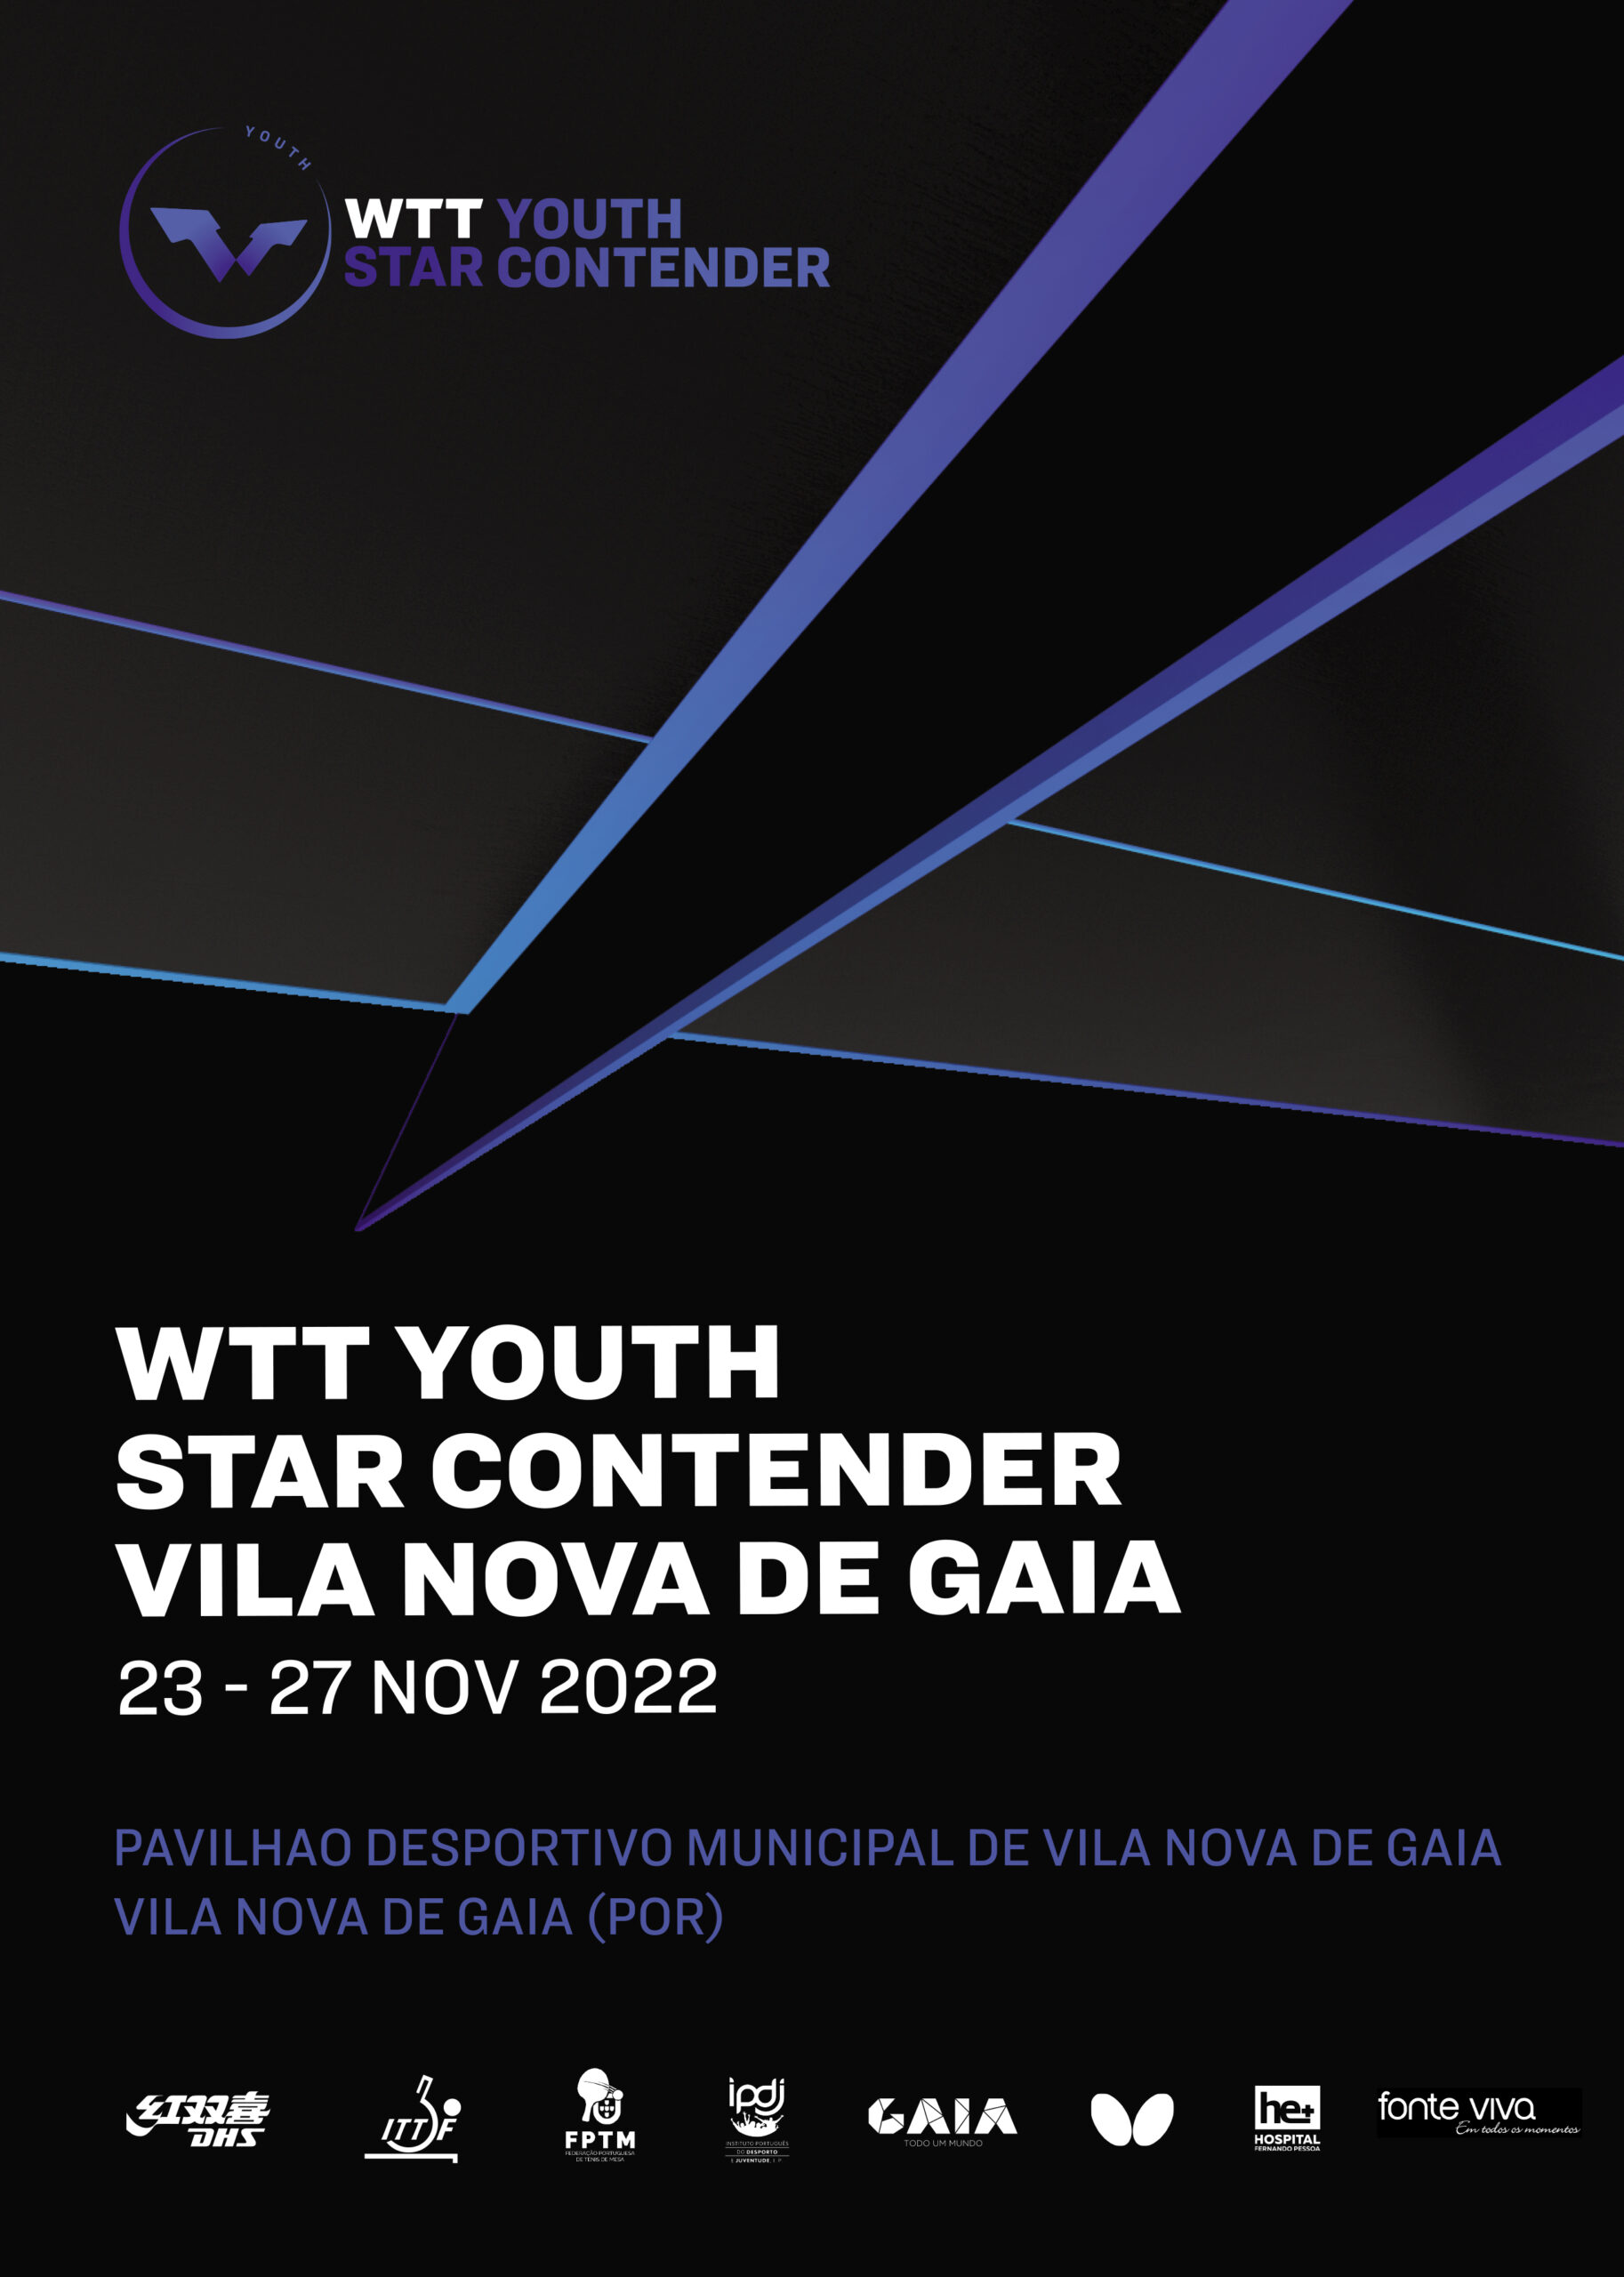 WTT Youth Star Contender Vila Nova de Gaia reúne elite mundial de jovens